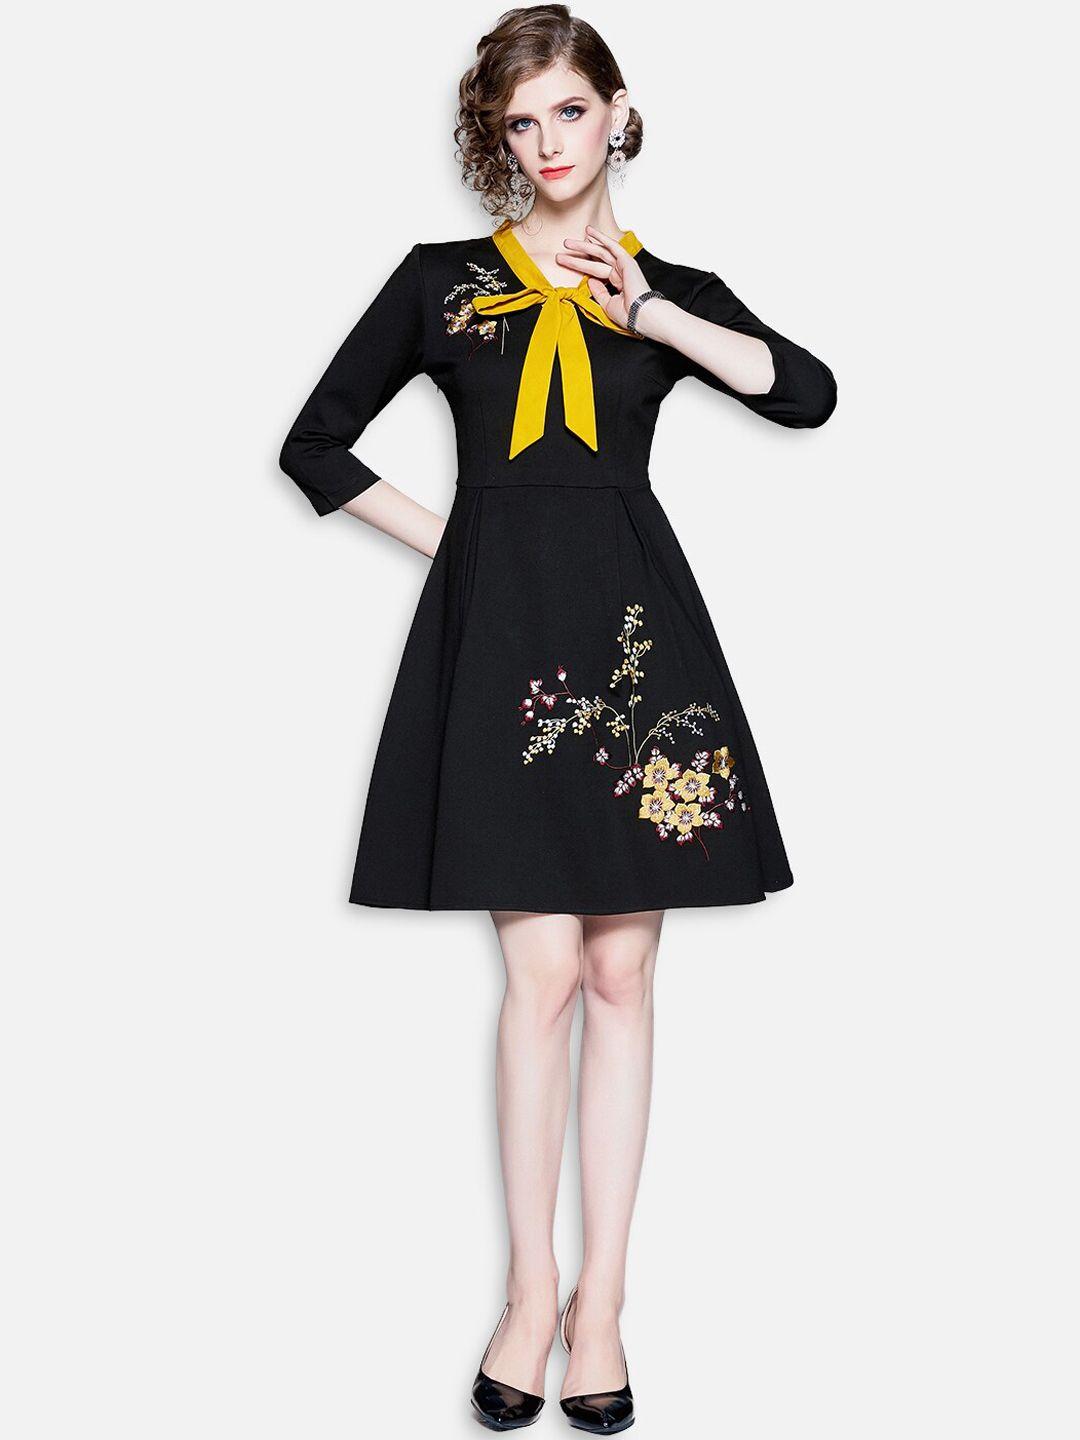 jc collection black floral dress